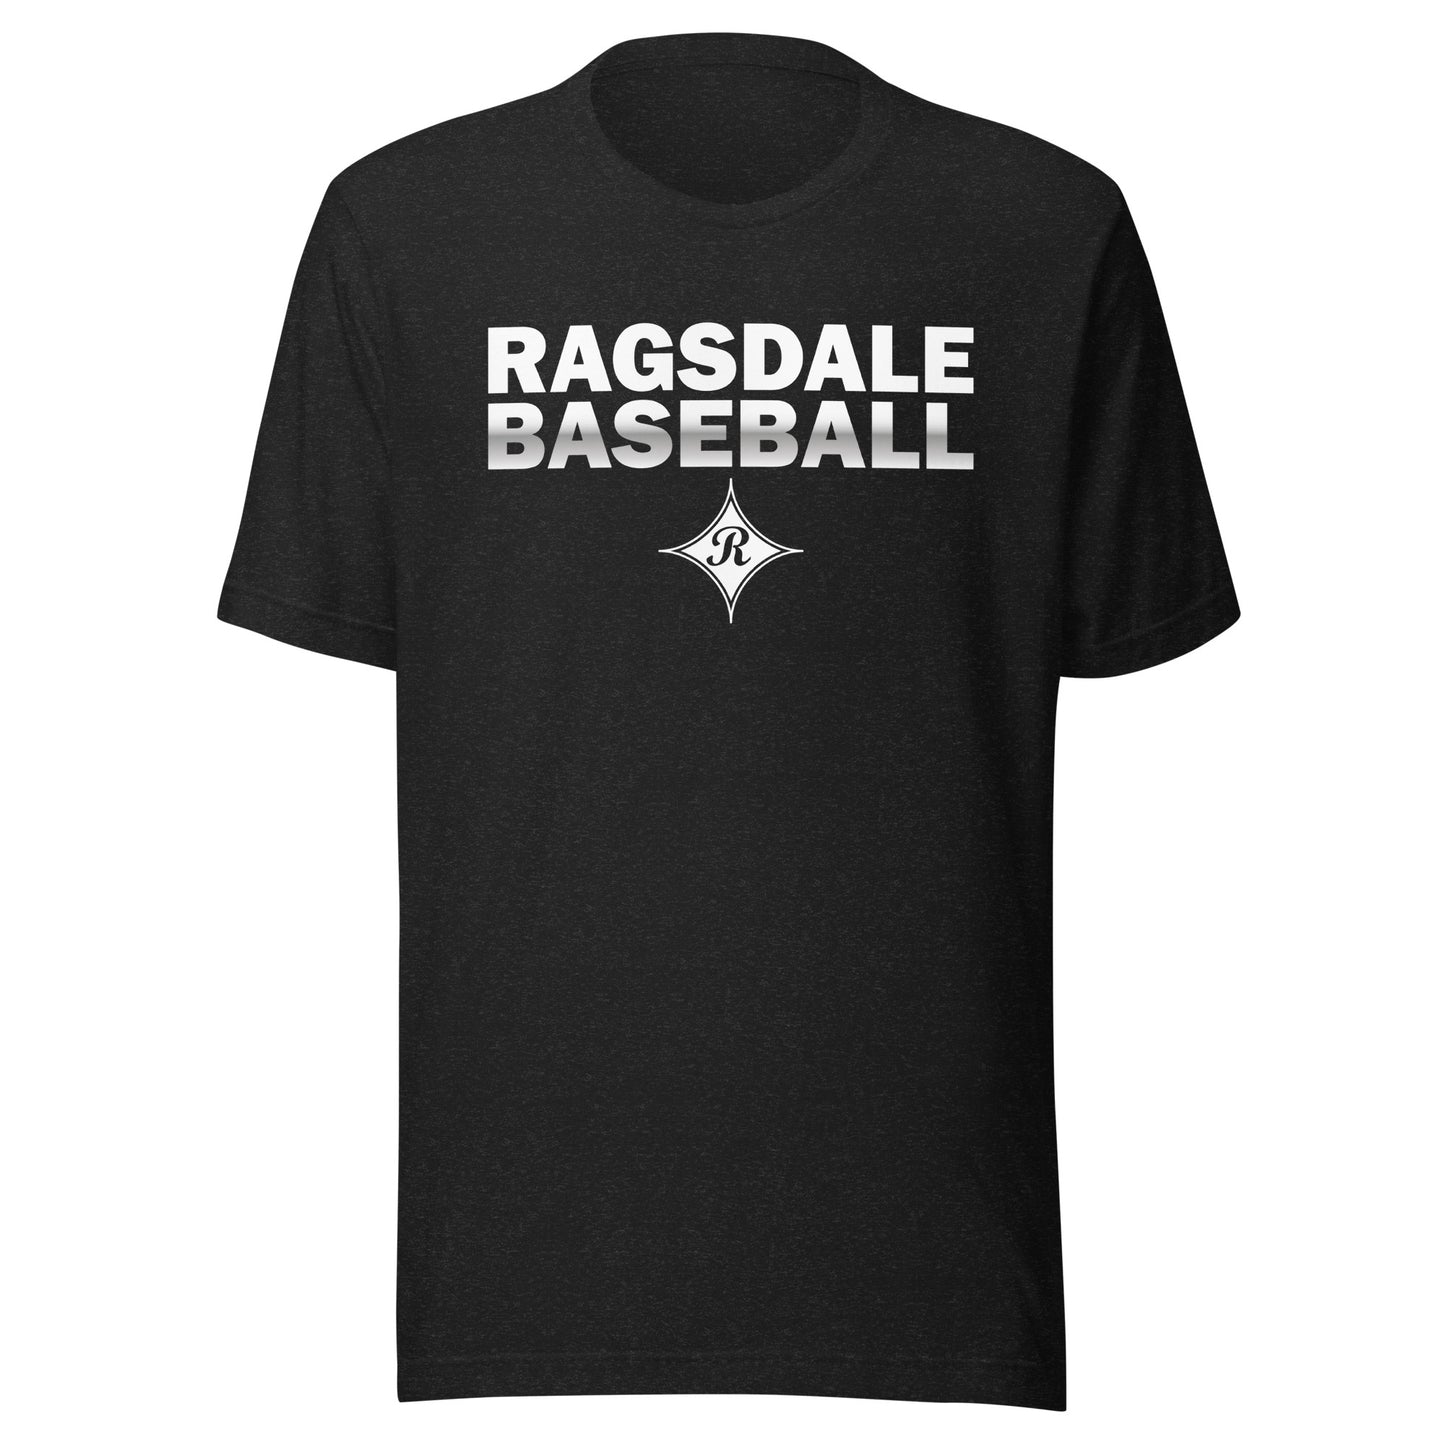 Ragsdale Baseball Fade Fashion T-Shirt